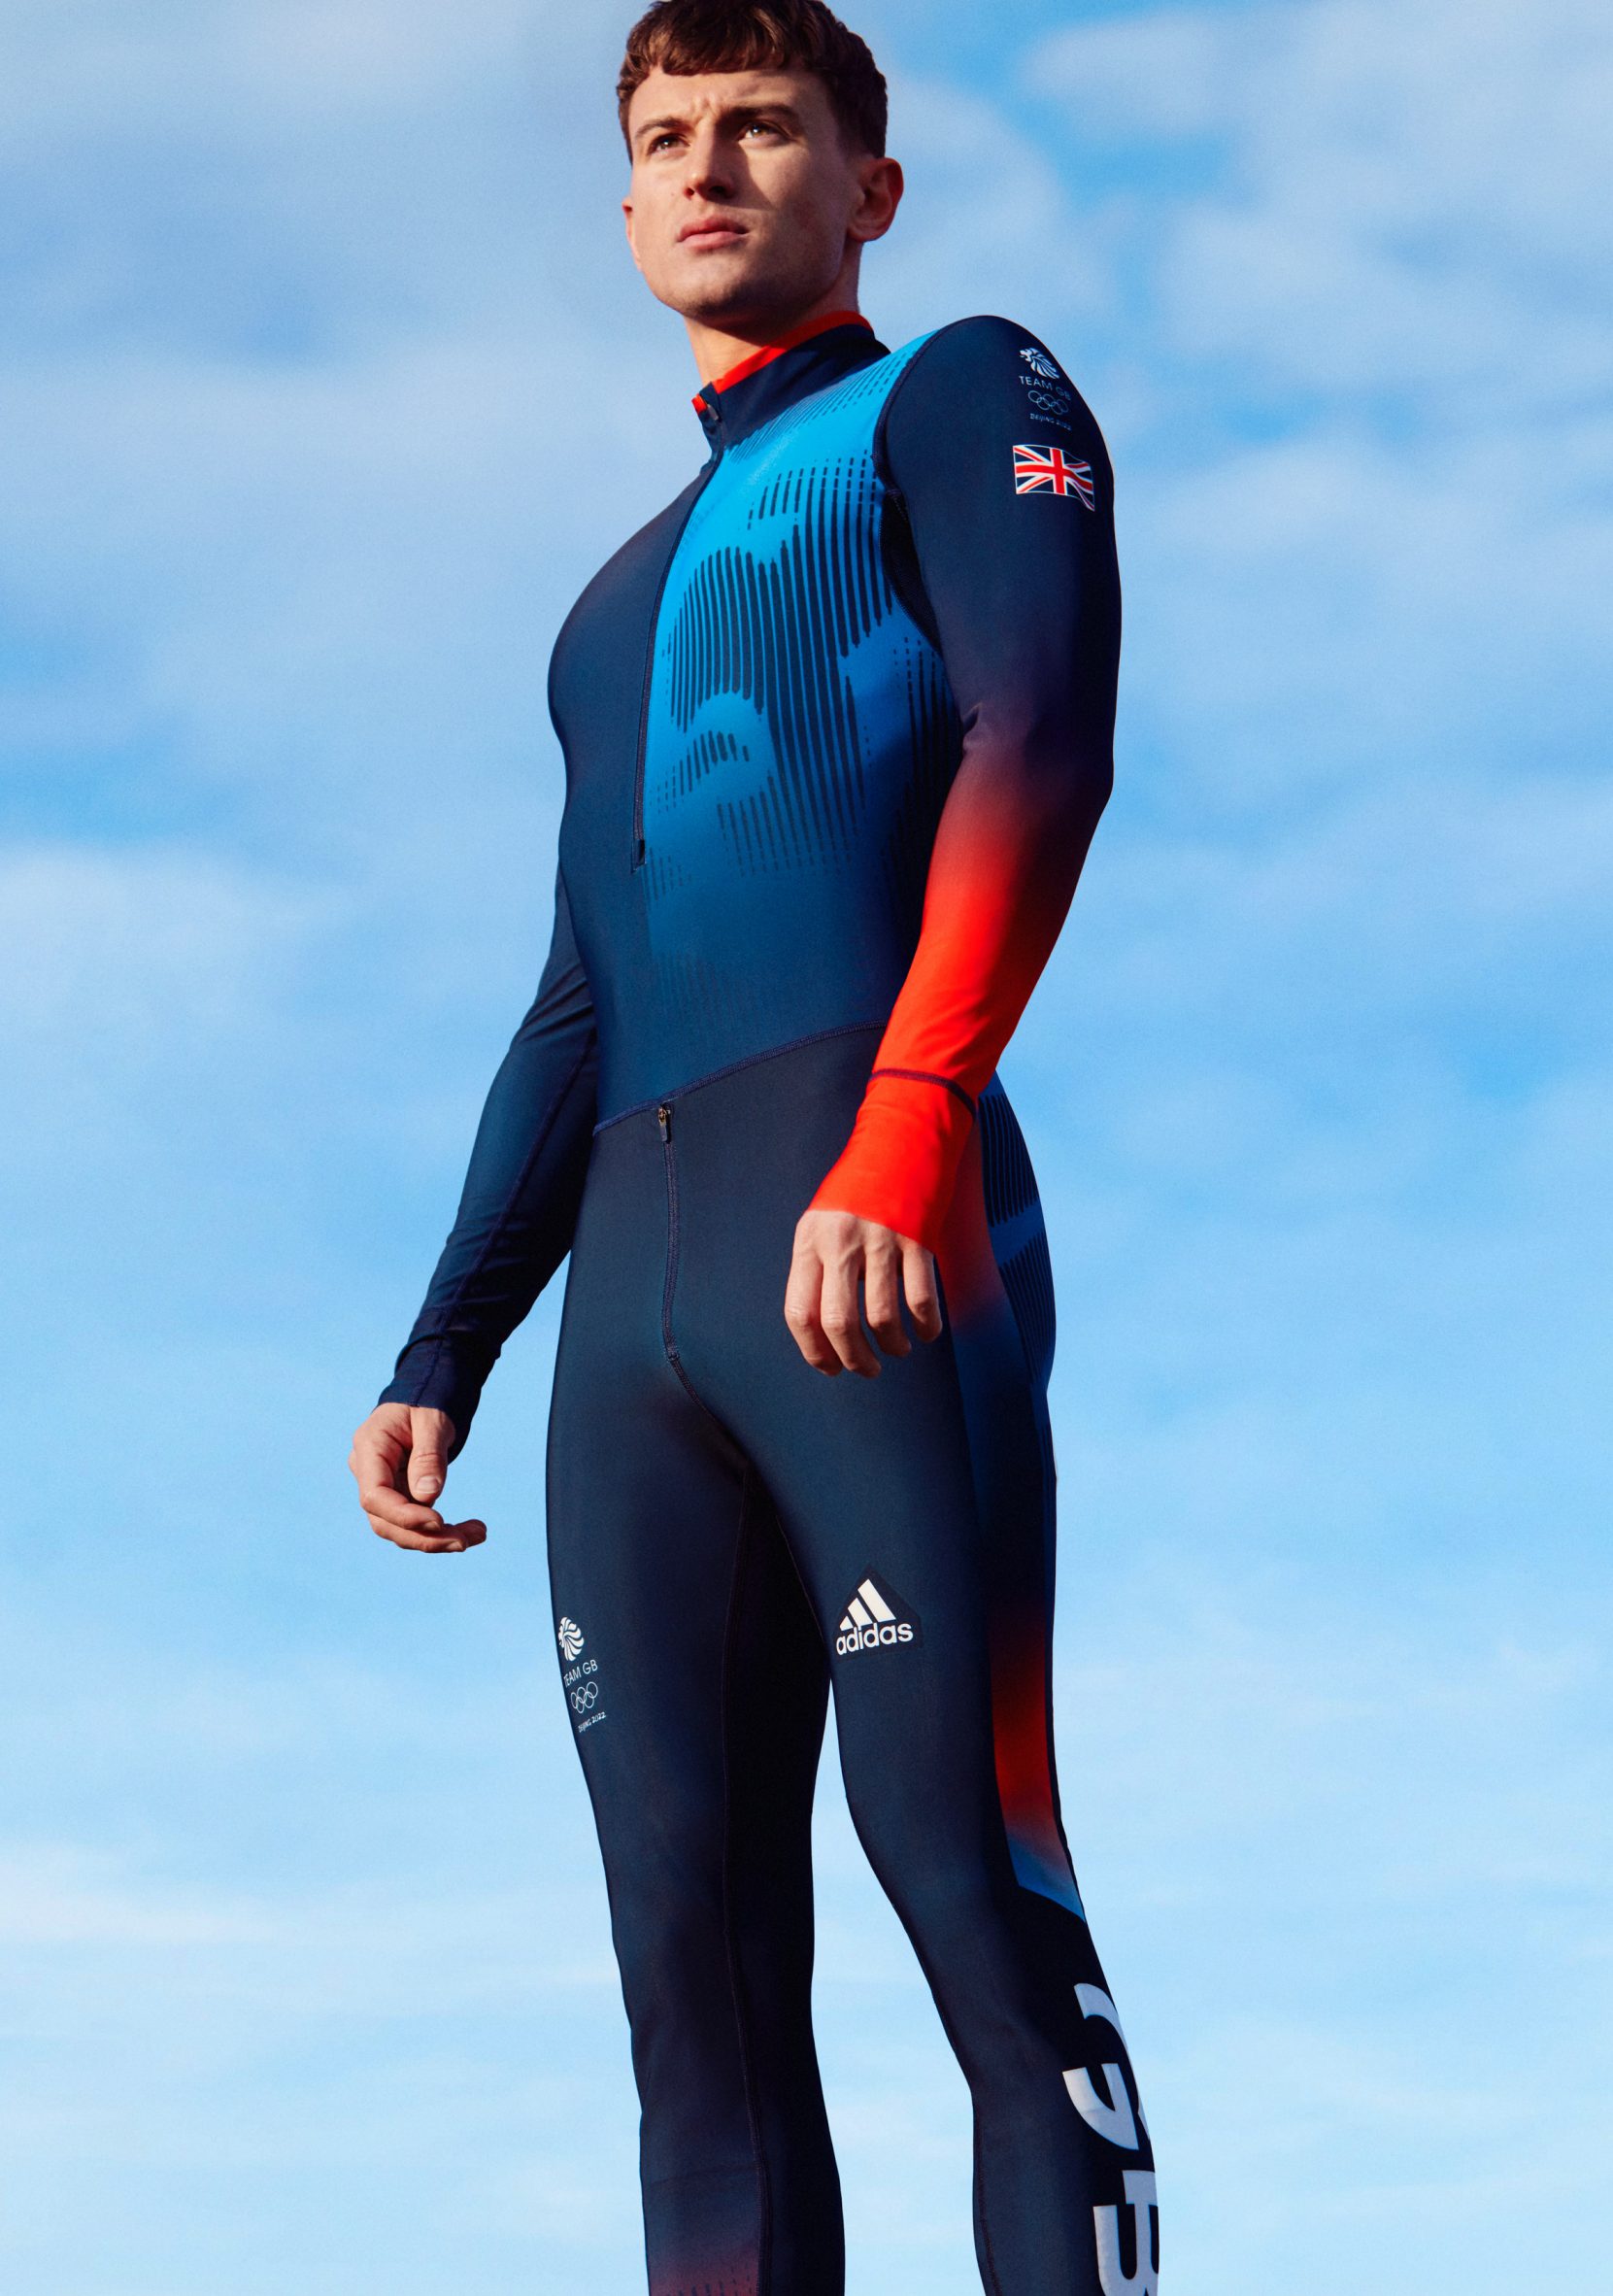 A man wearing Adidas' Team GB Winter Olympics uniform